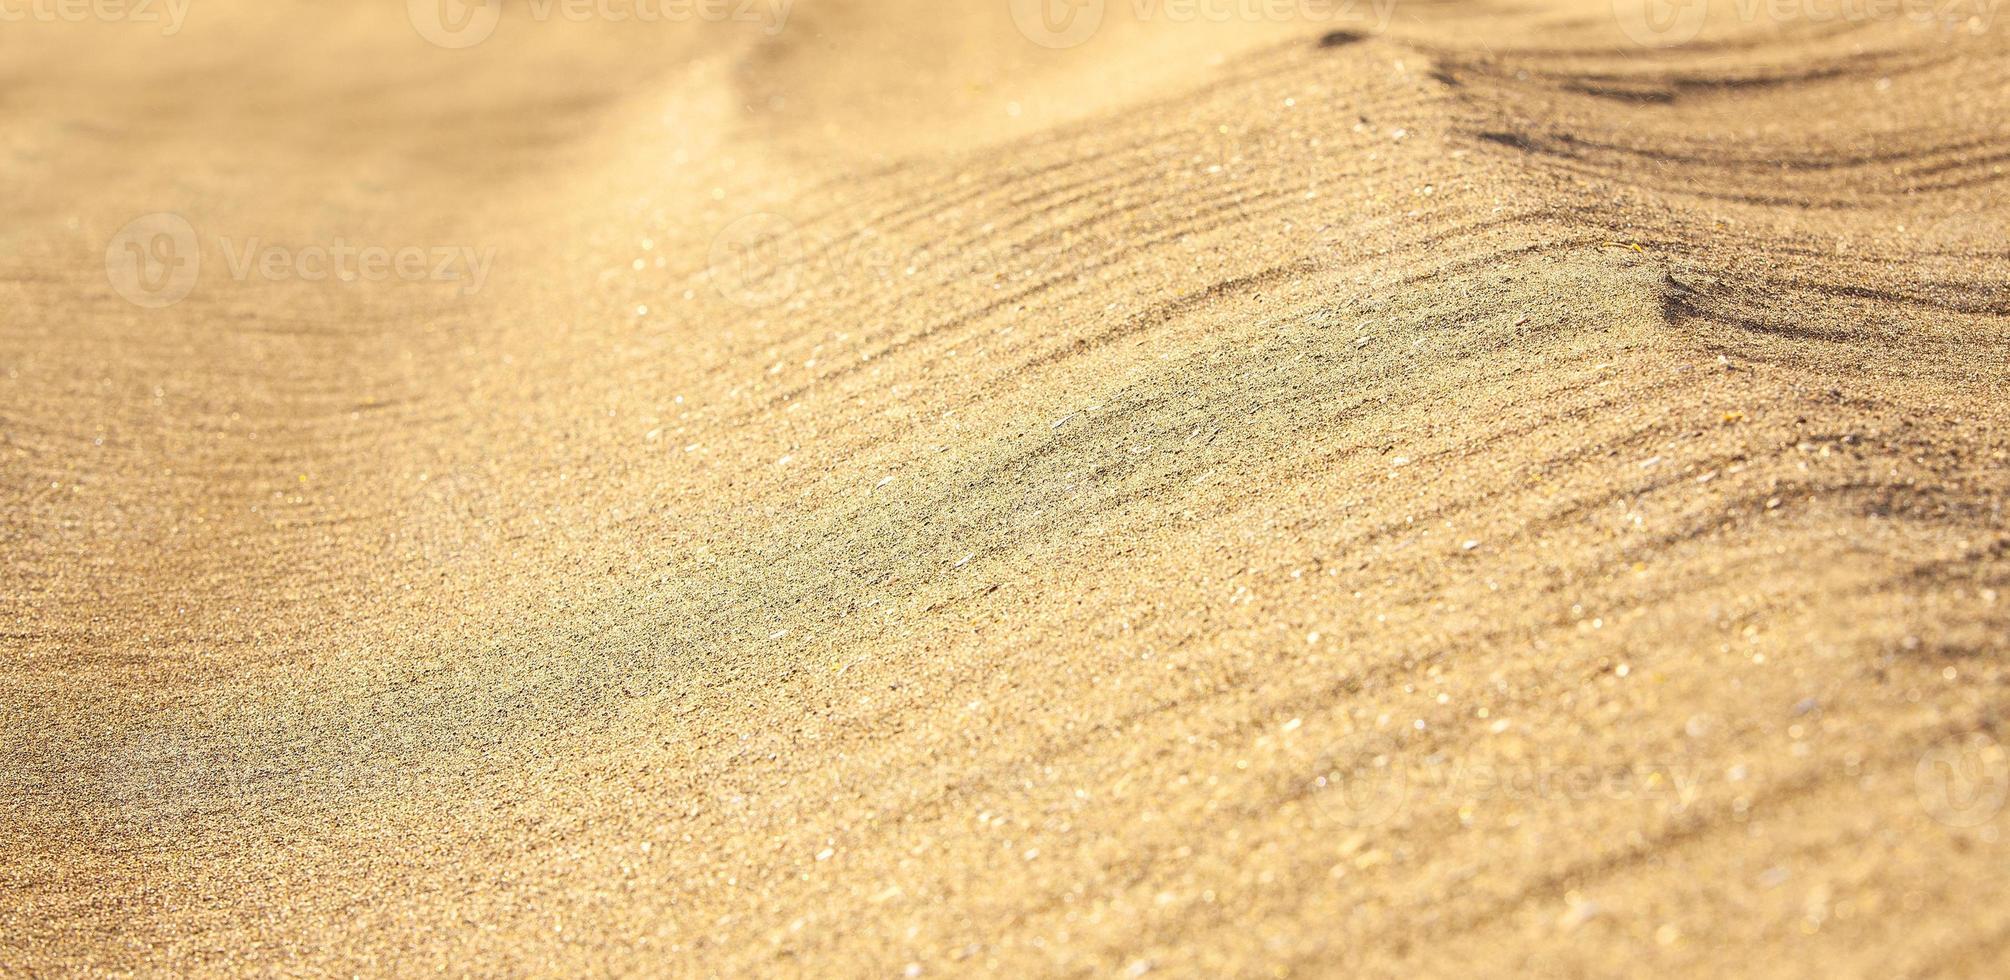 primer plano de arena amarilla como textura. enfoque selectivo foto